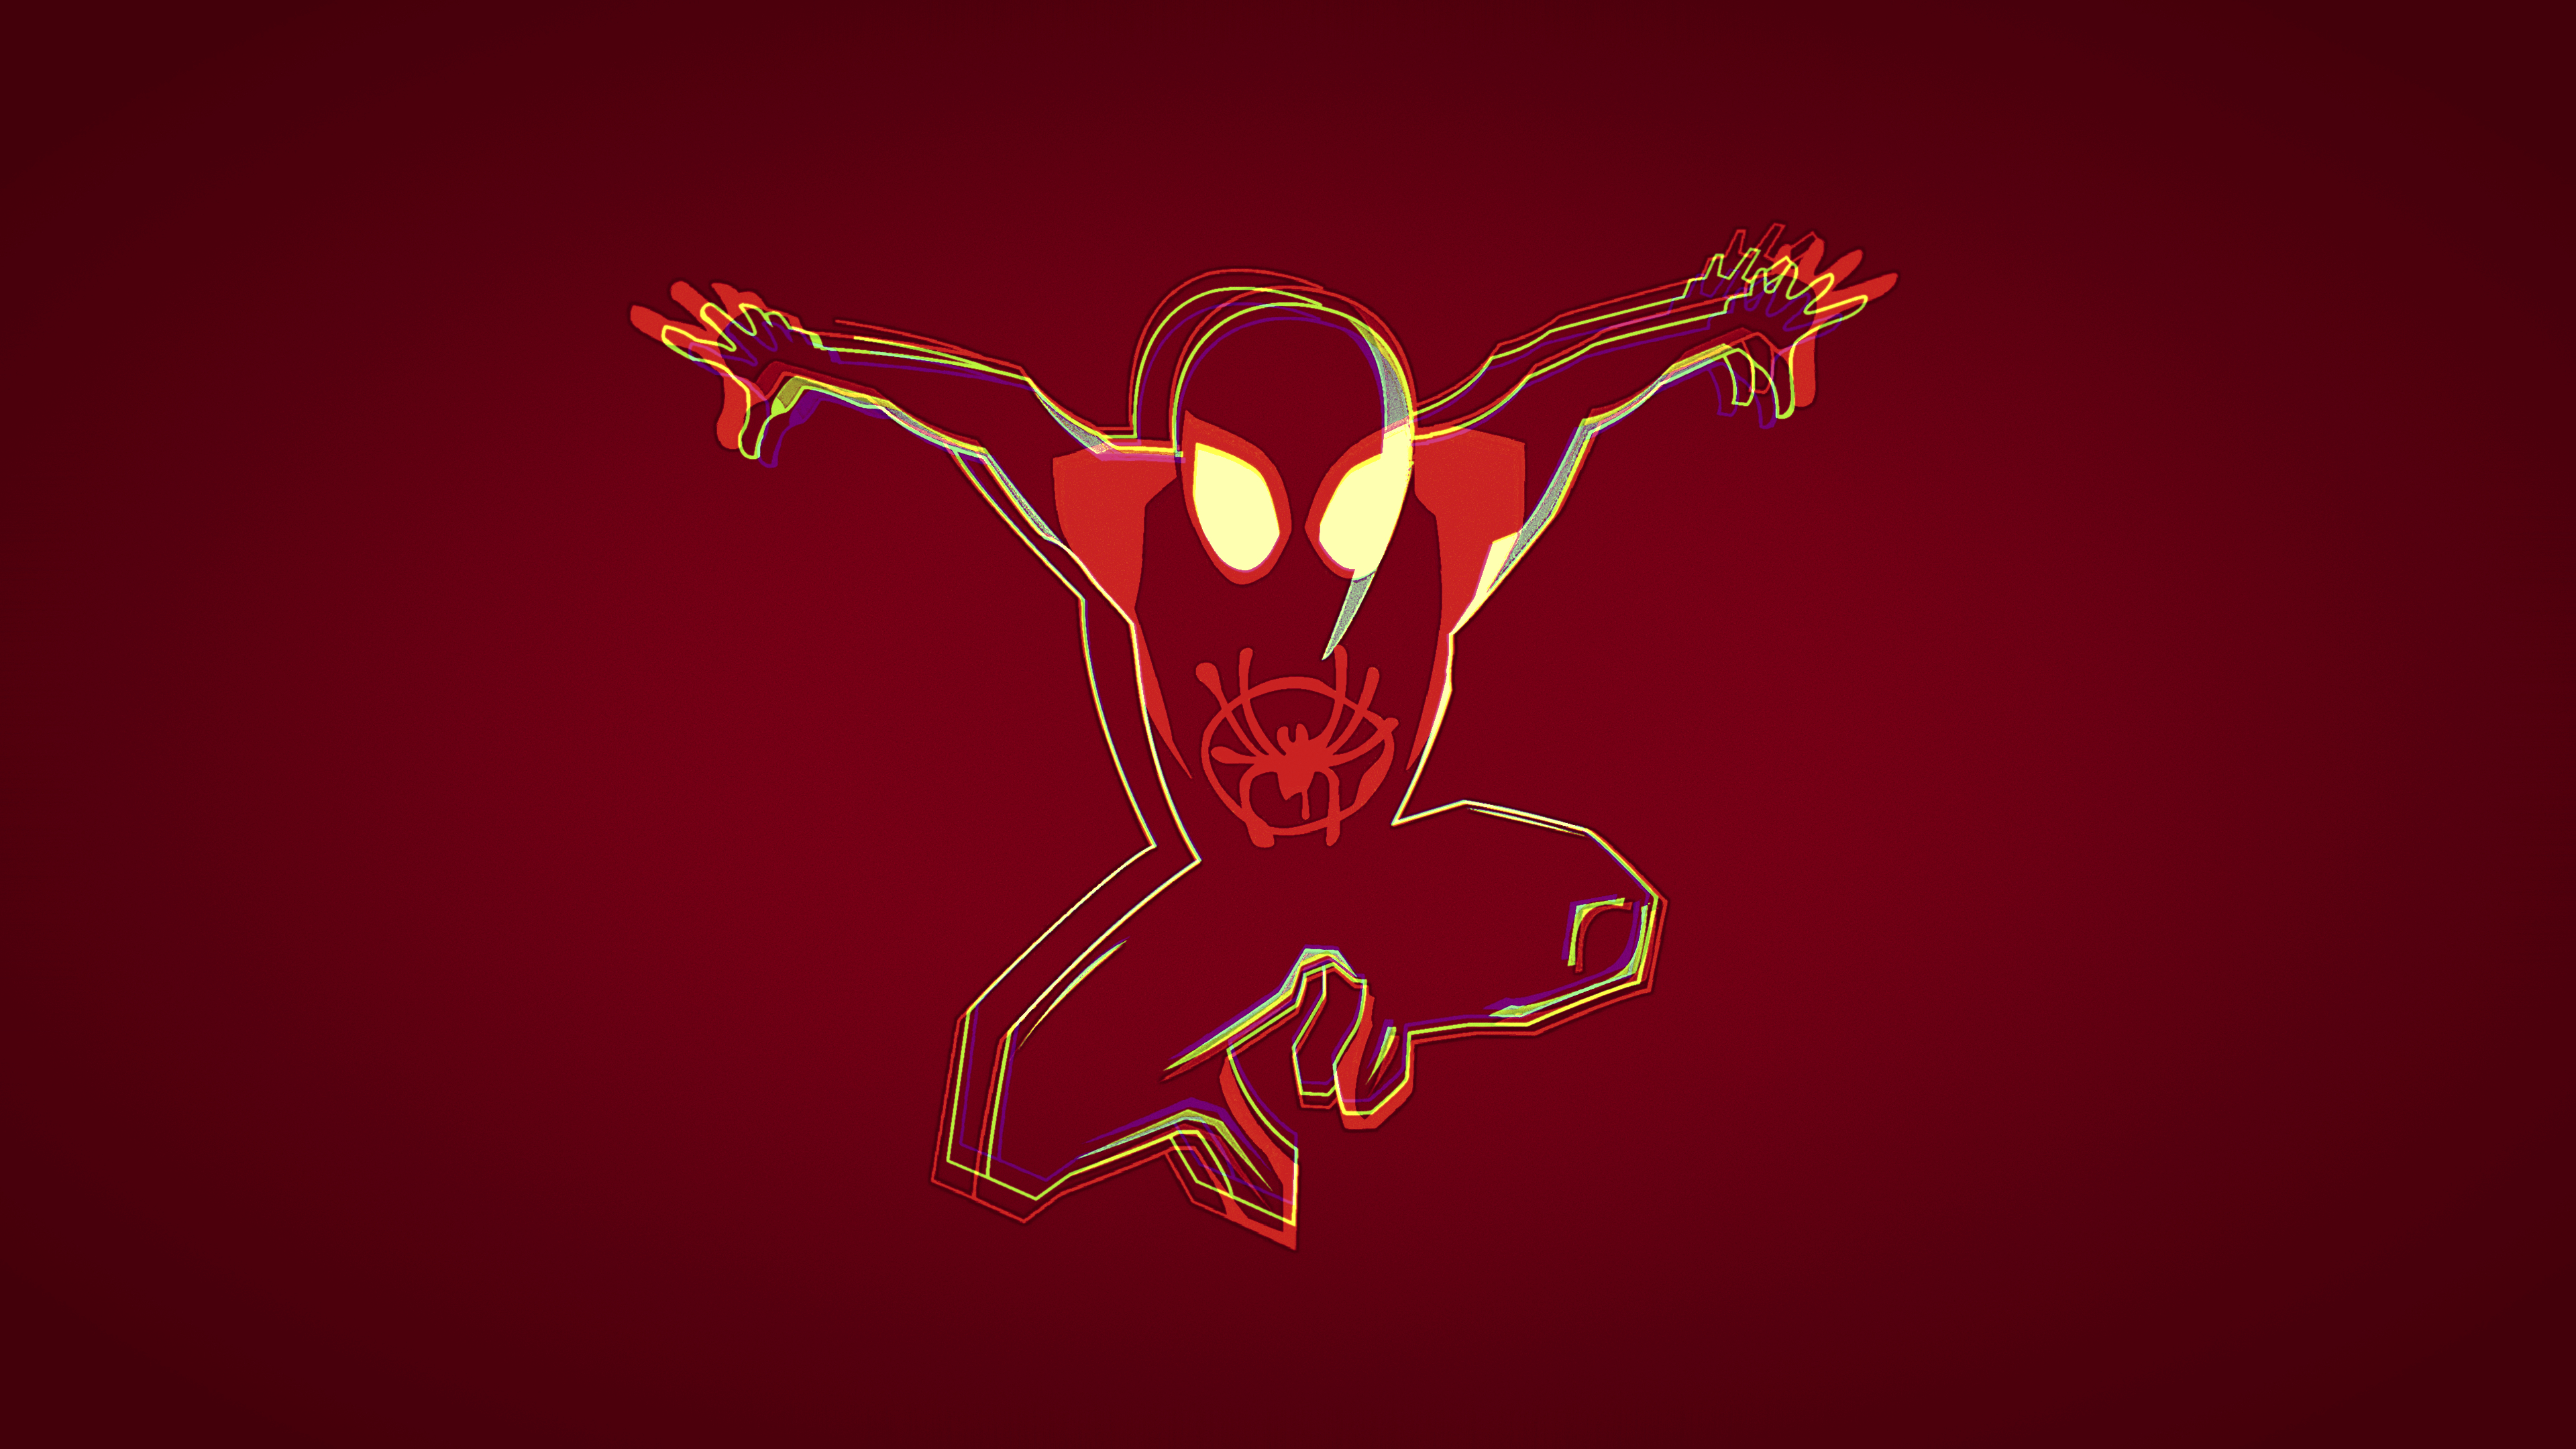 Spider Man Into The Spider Verse - HD Wallpaper 